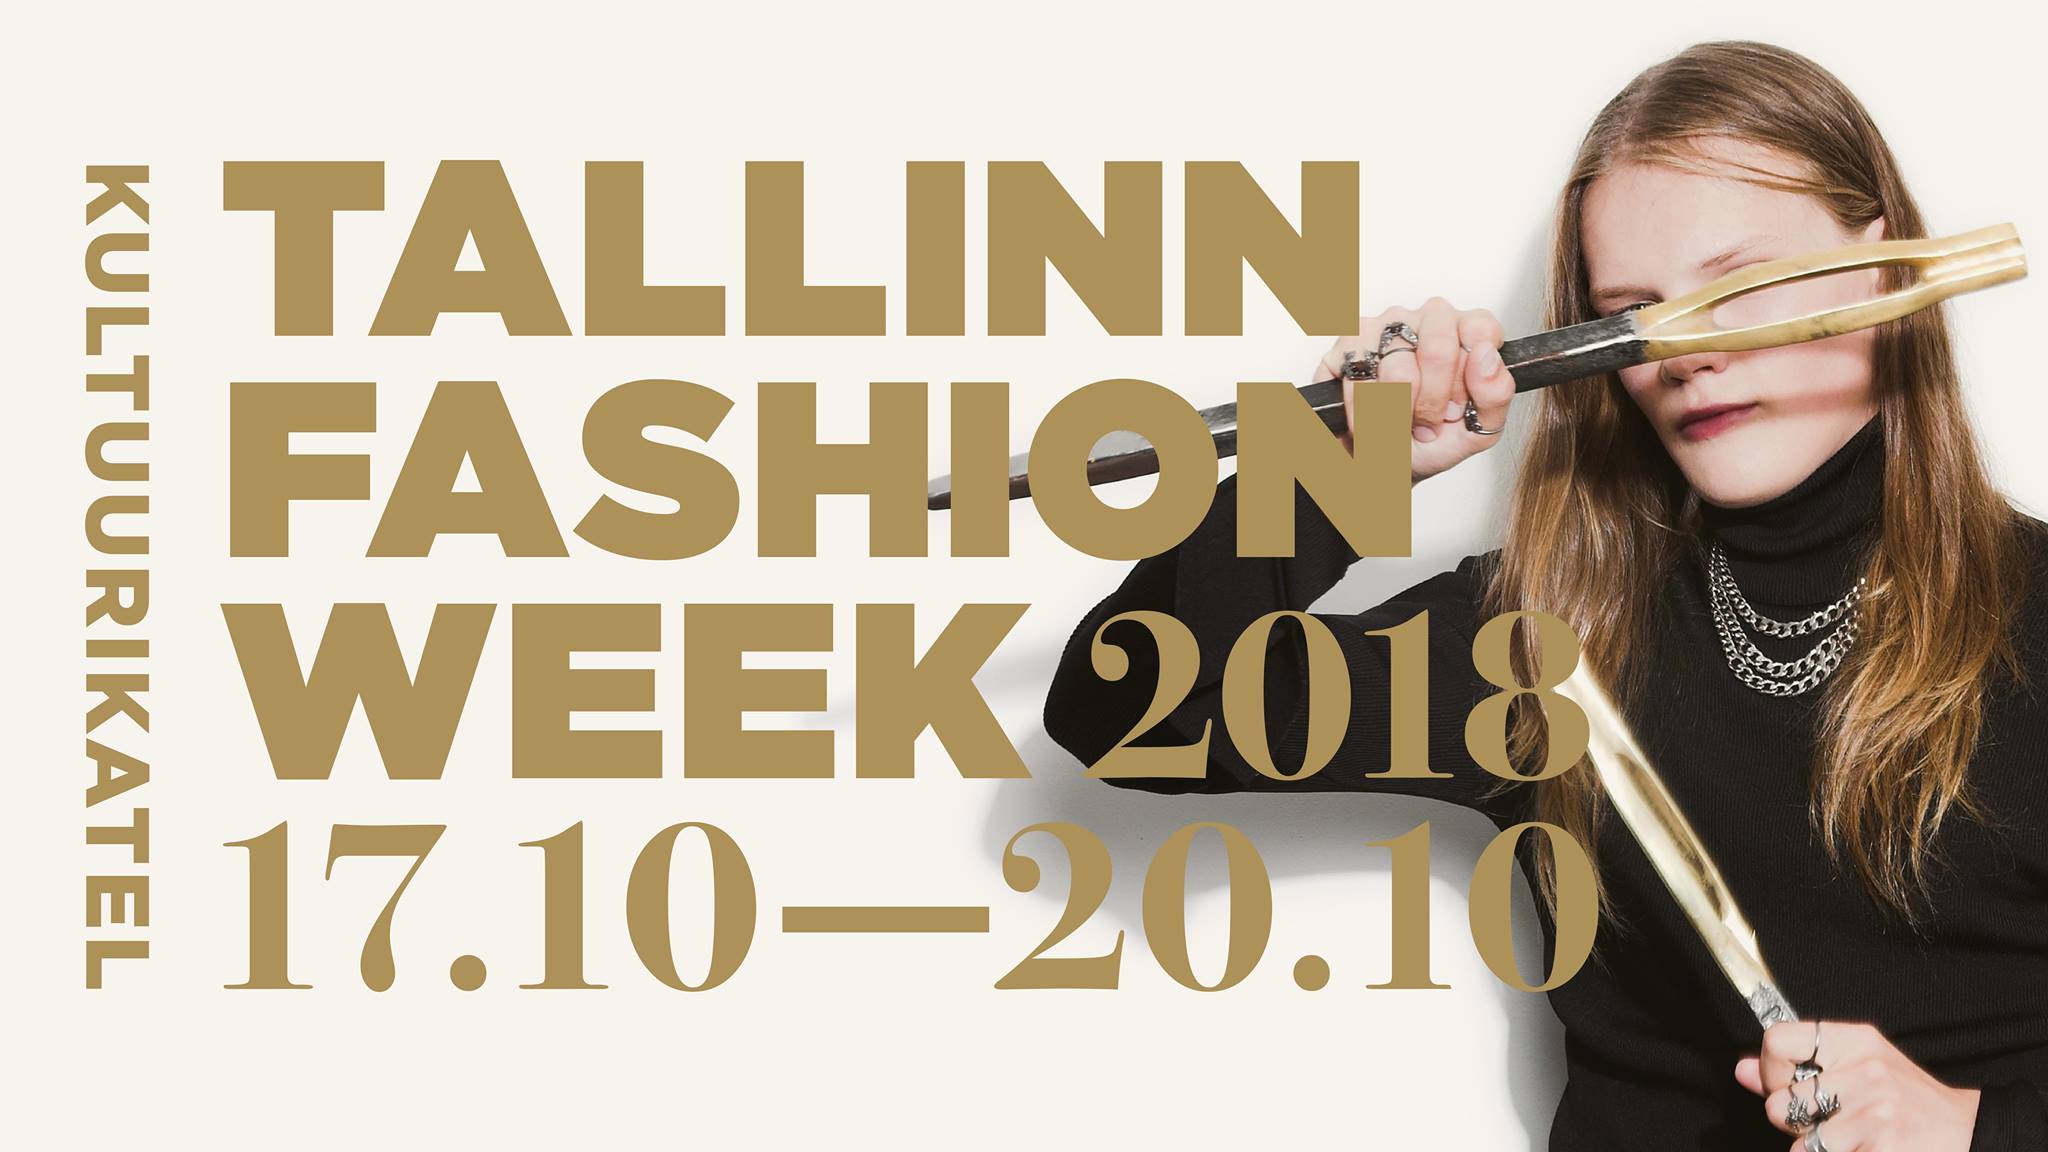 8317Tallinn Fashion Week 2018